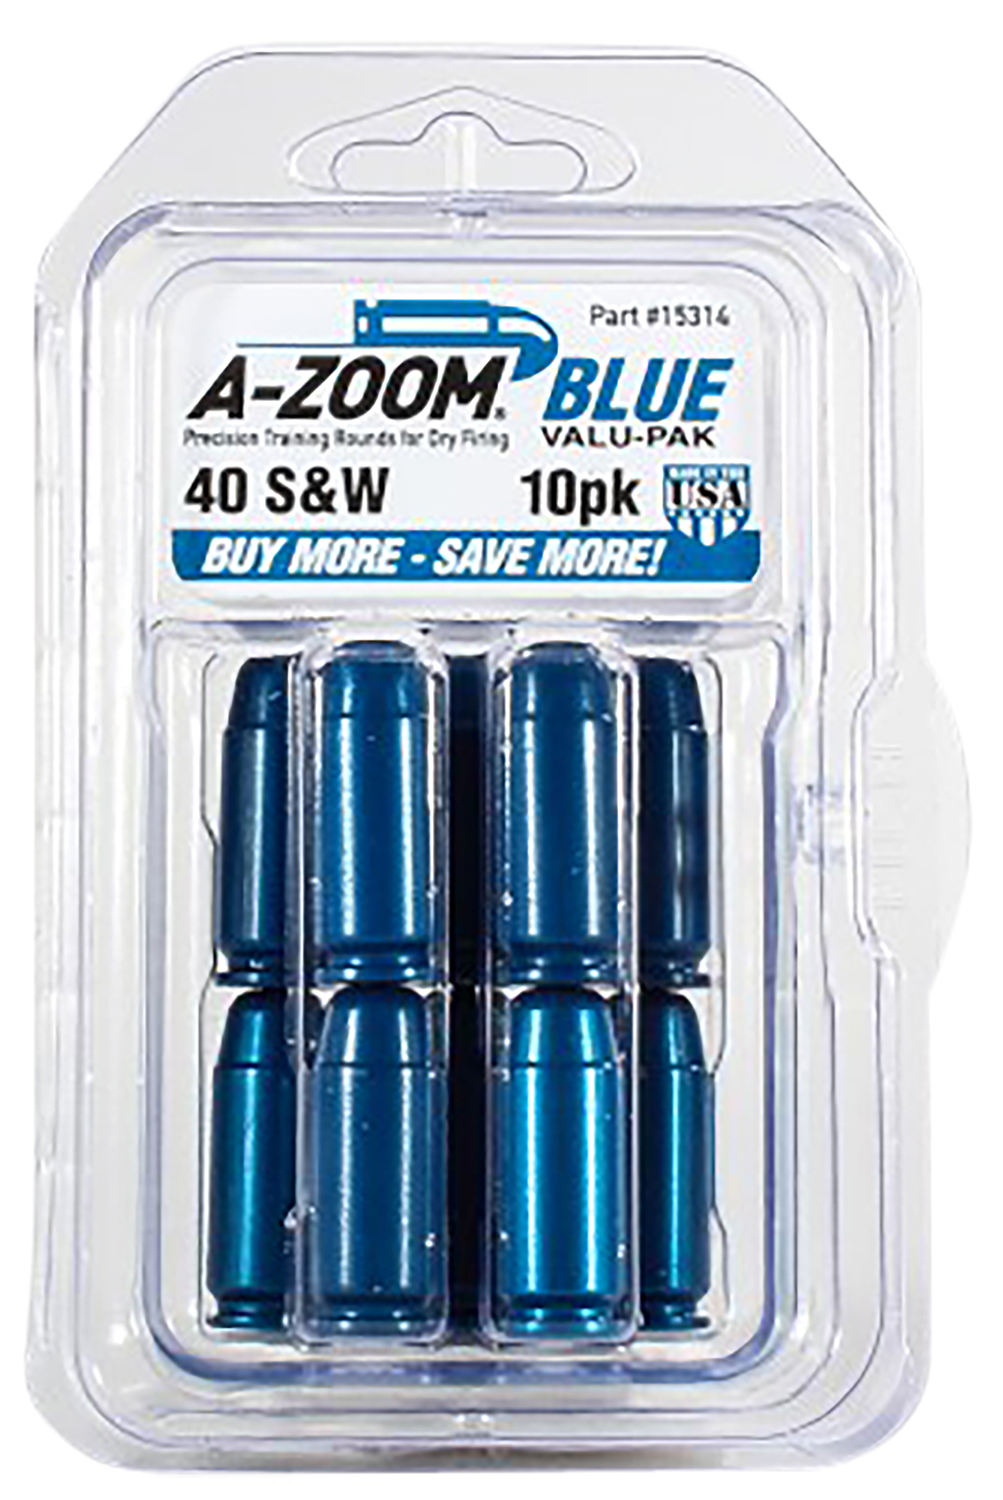 A-Zoom 15314 Value Pack Pistol 40 S&W Aluminum 10 Pk